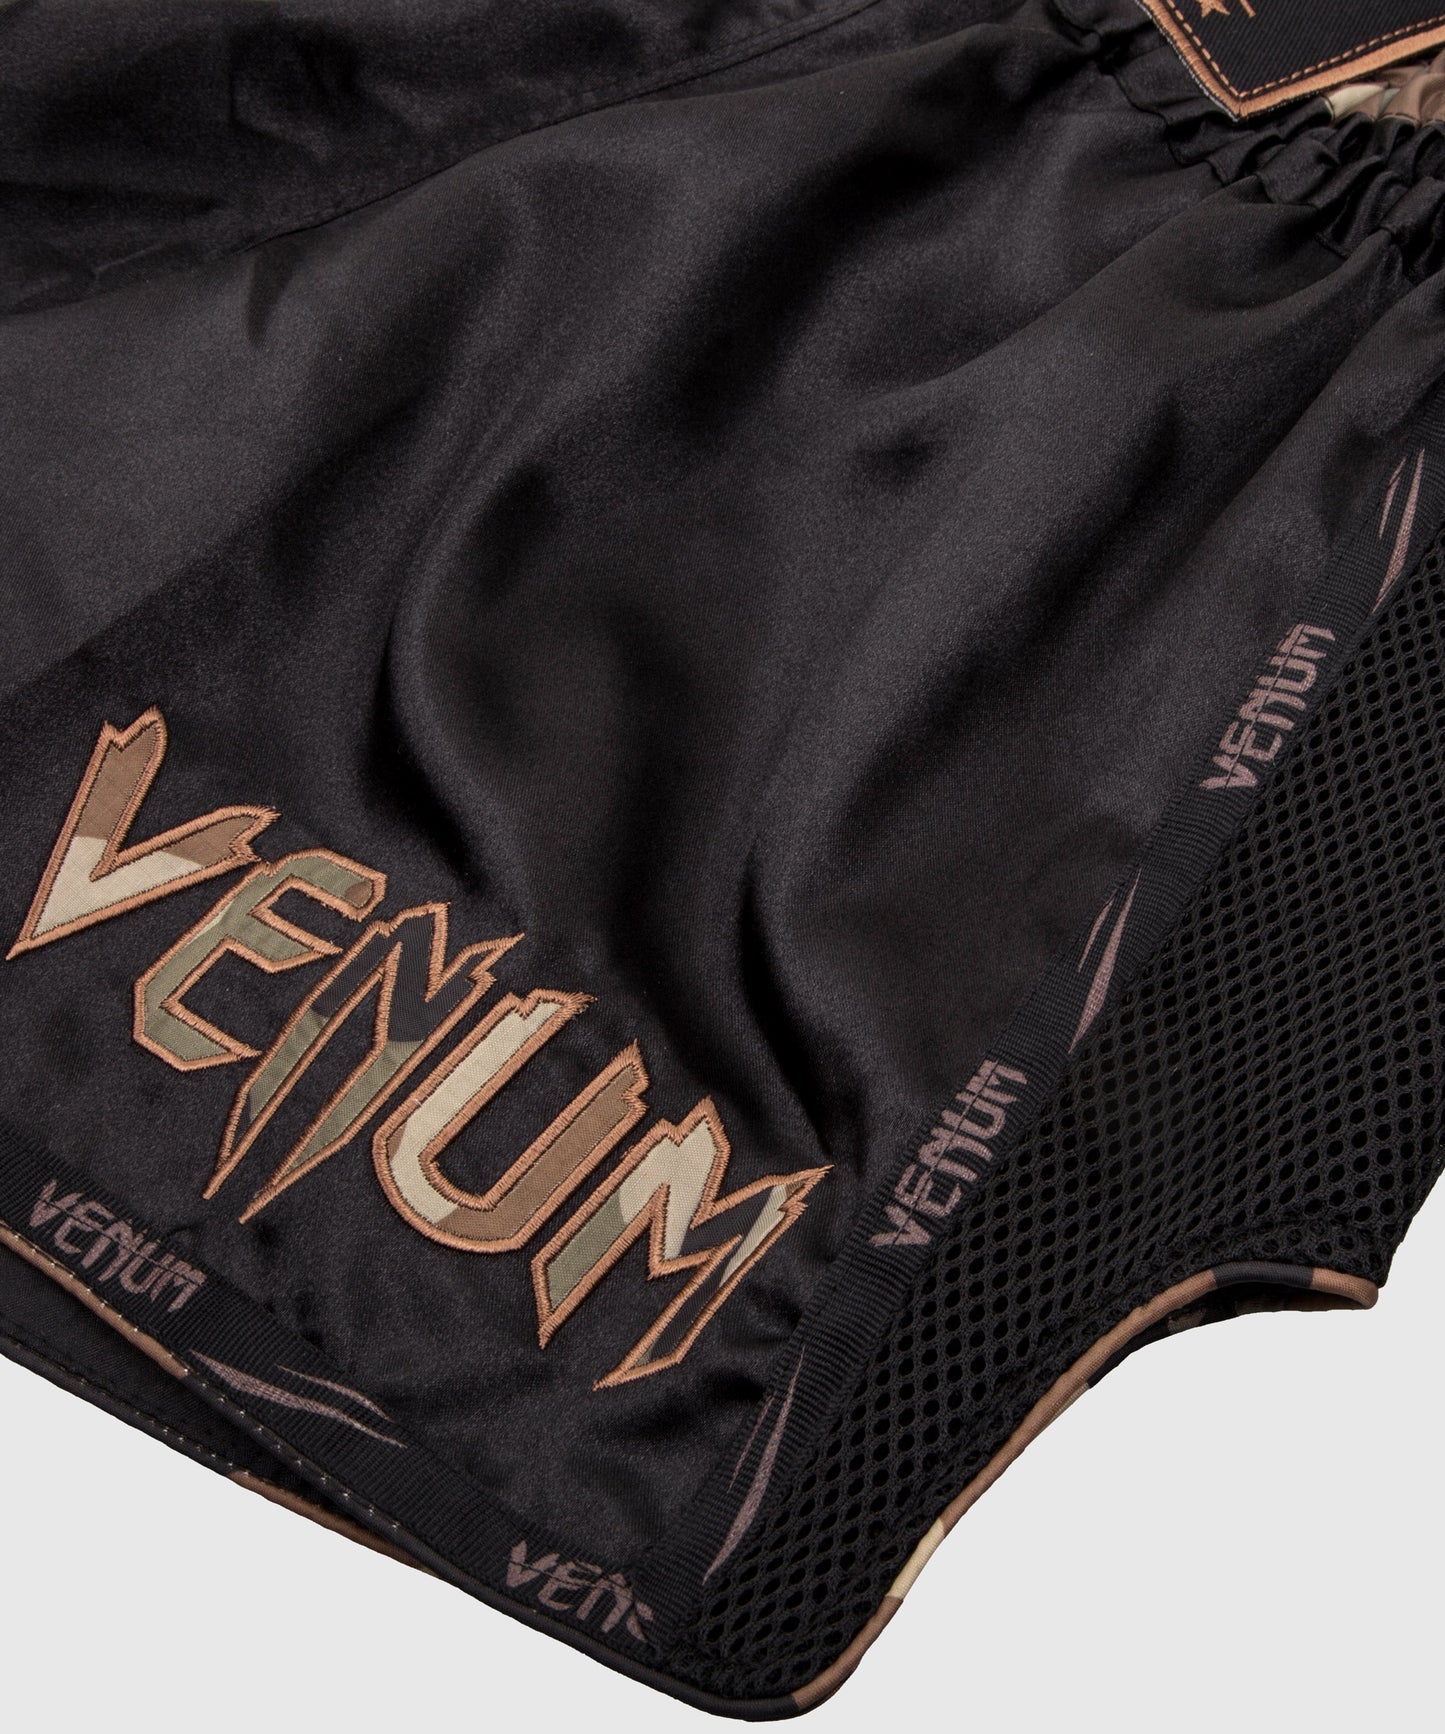 Pantalones Cortos de Muay Thai Venum Giant - Negro/Bosque Camo